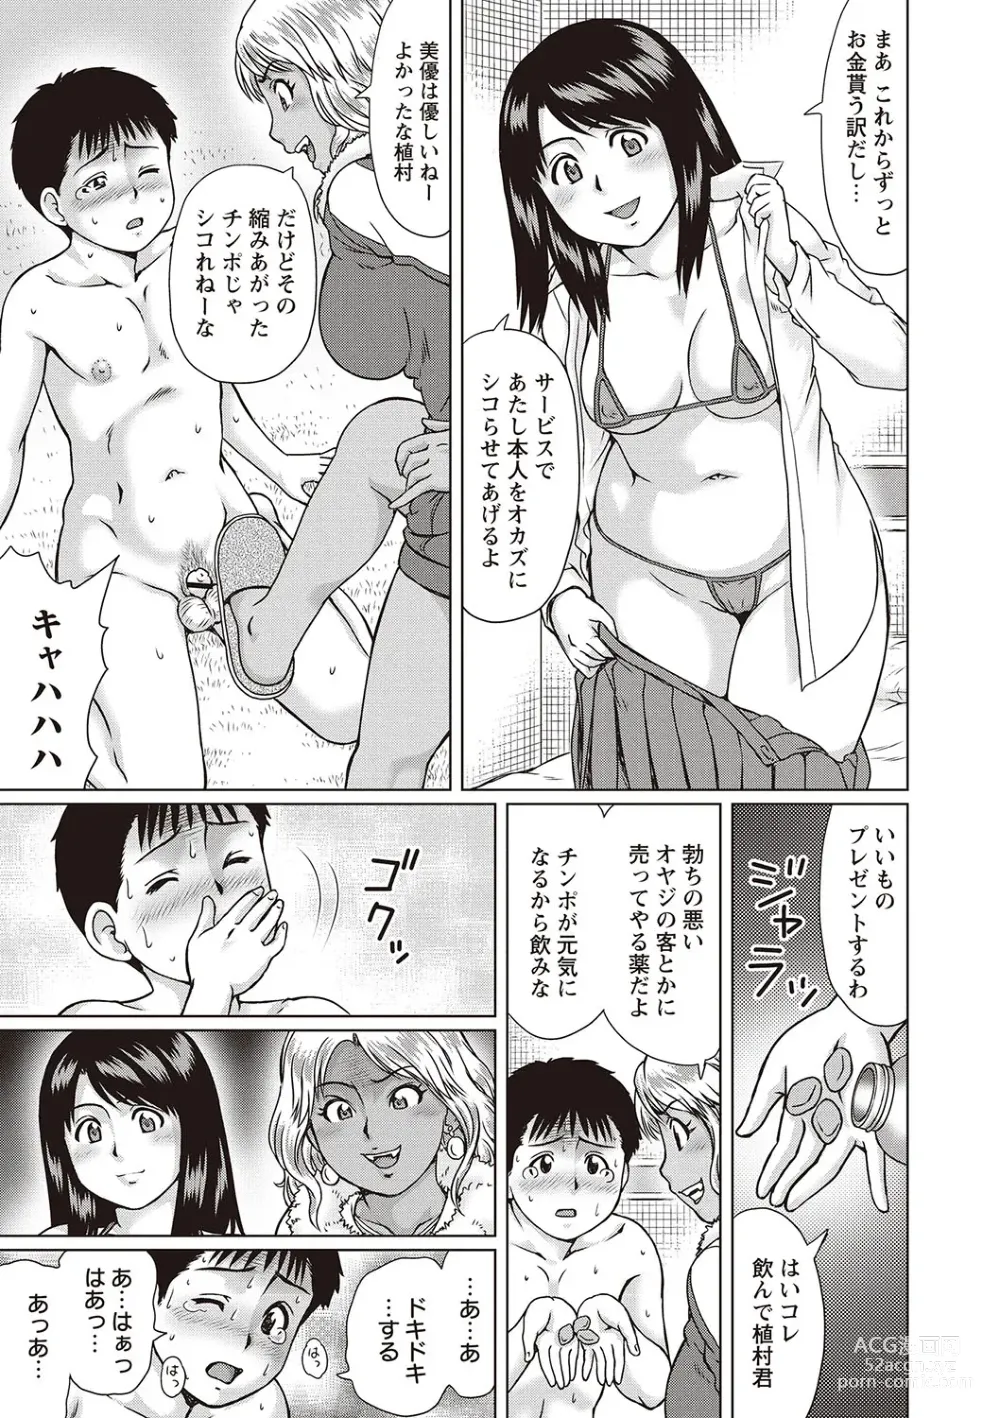 Page 92 of manga Doutei Revenge SEX